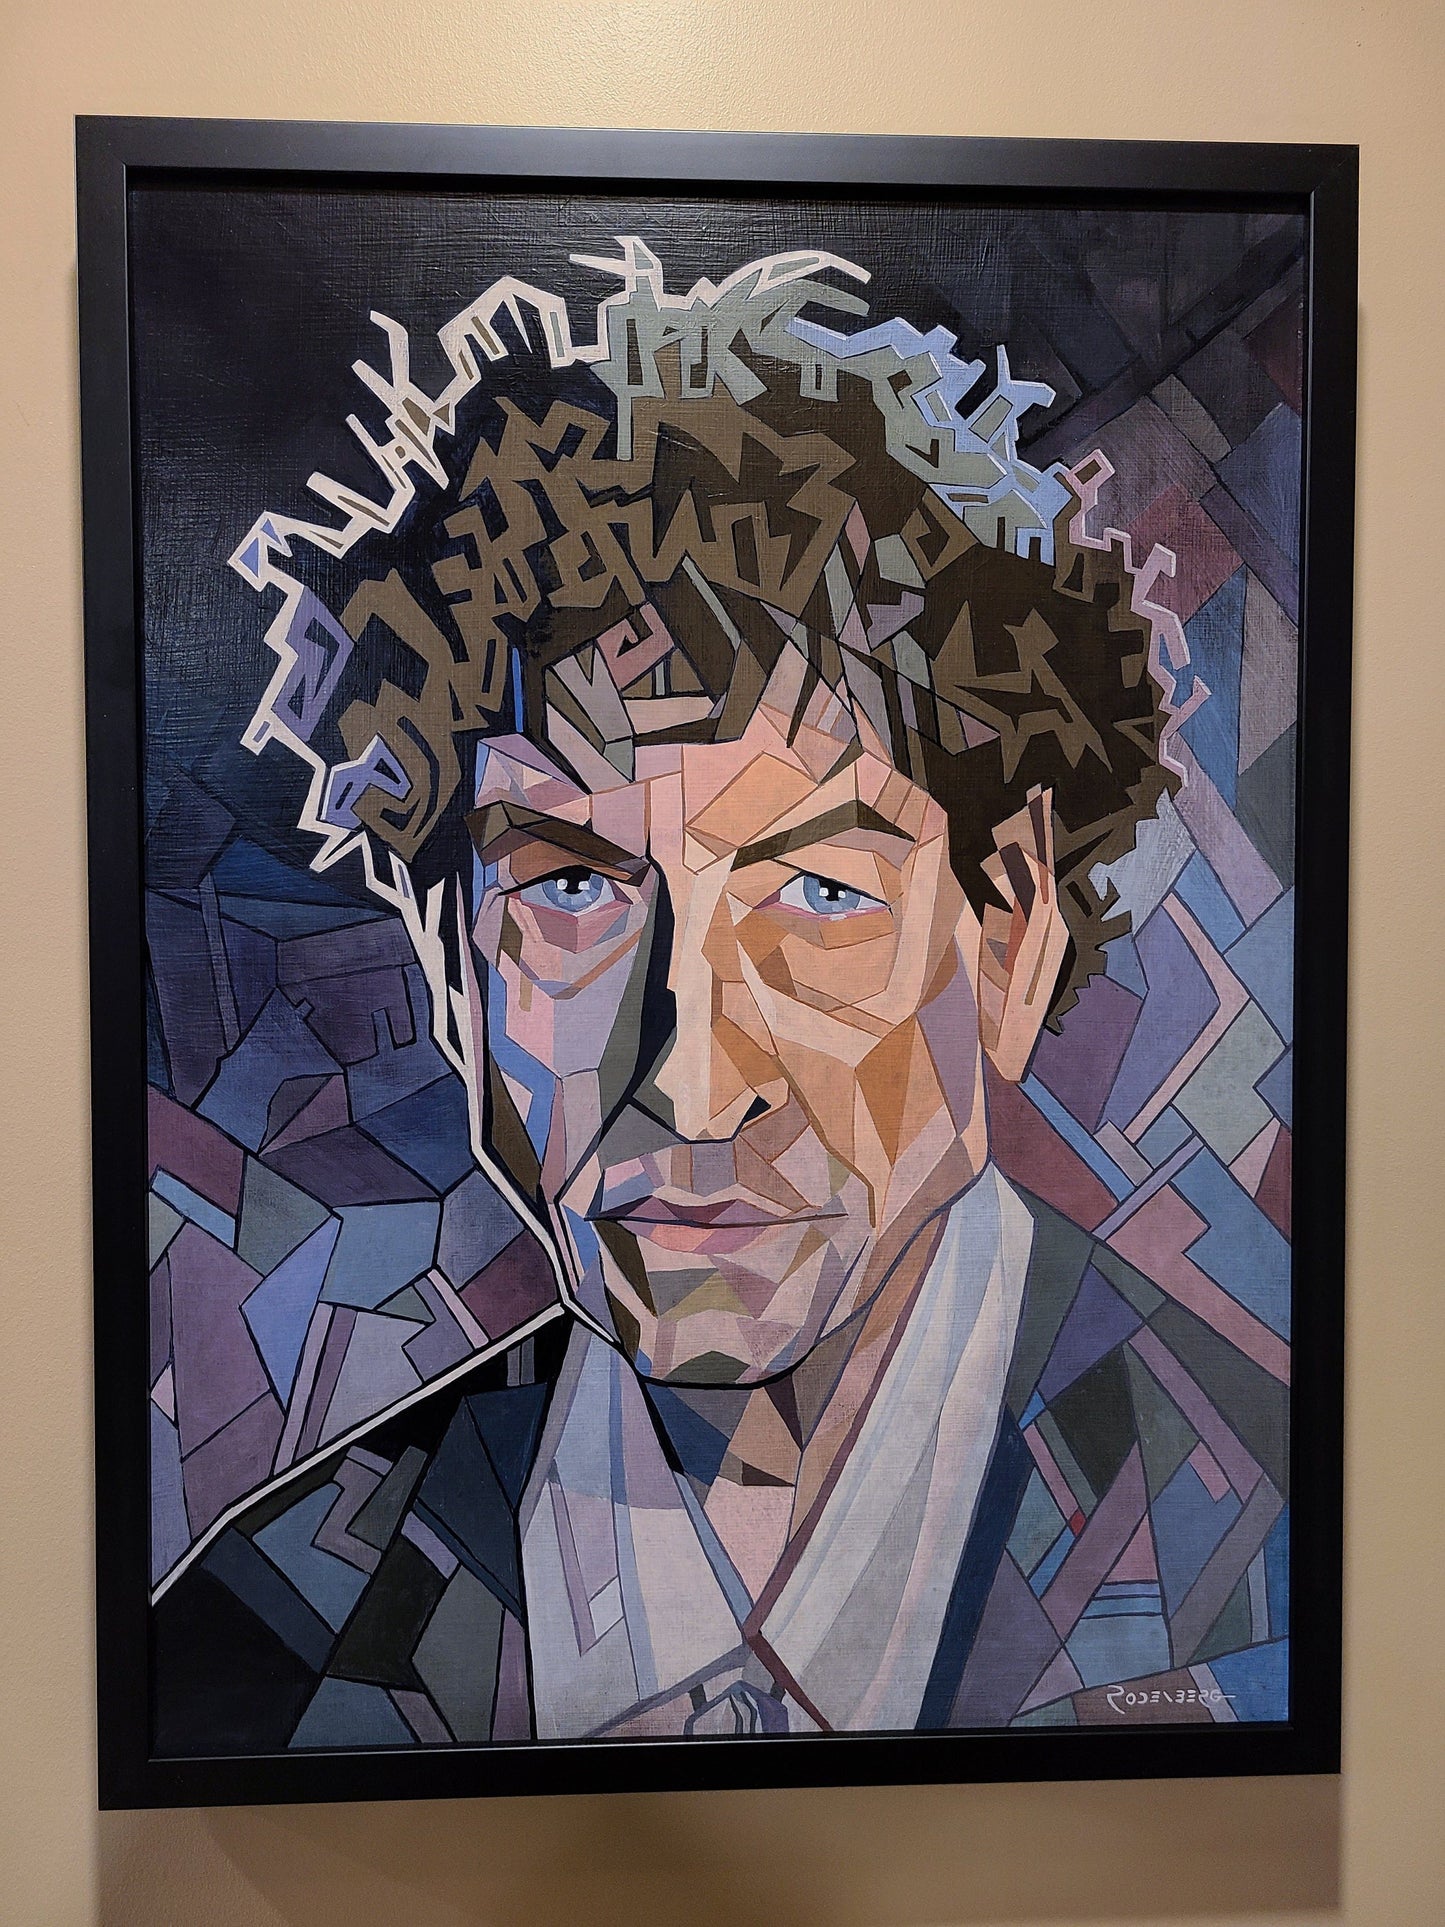 Bob Dylan painting